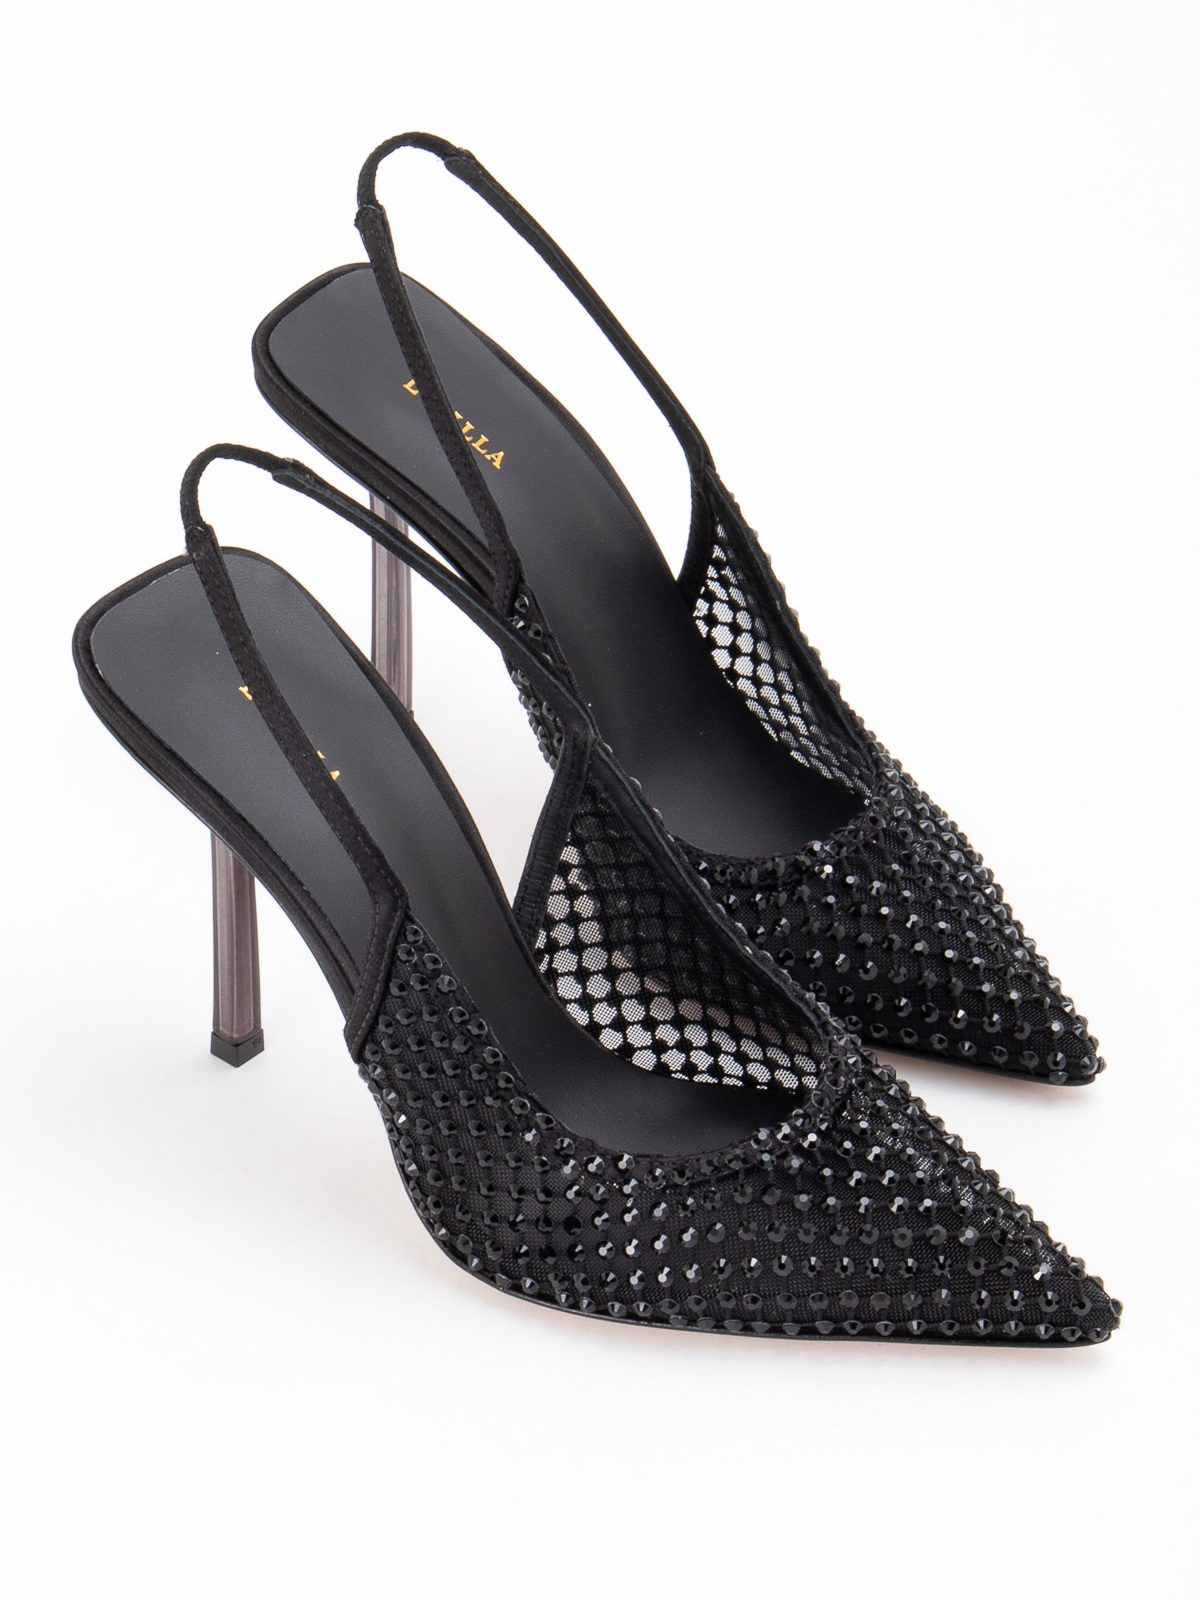 Shoes Size 5 Black Heels | Black Heel Shoe Size 10 | Lovir High Heels Shoes  - Black High - Aliexpress